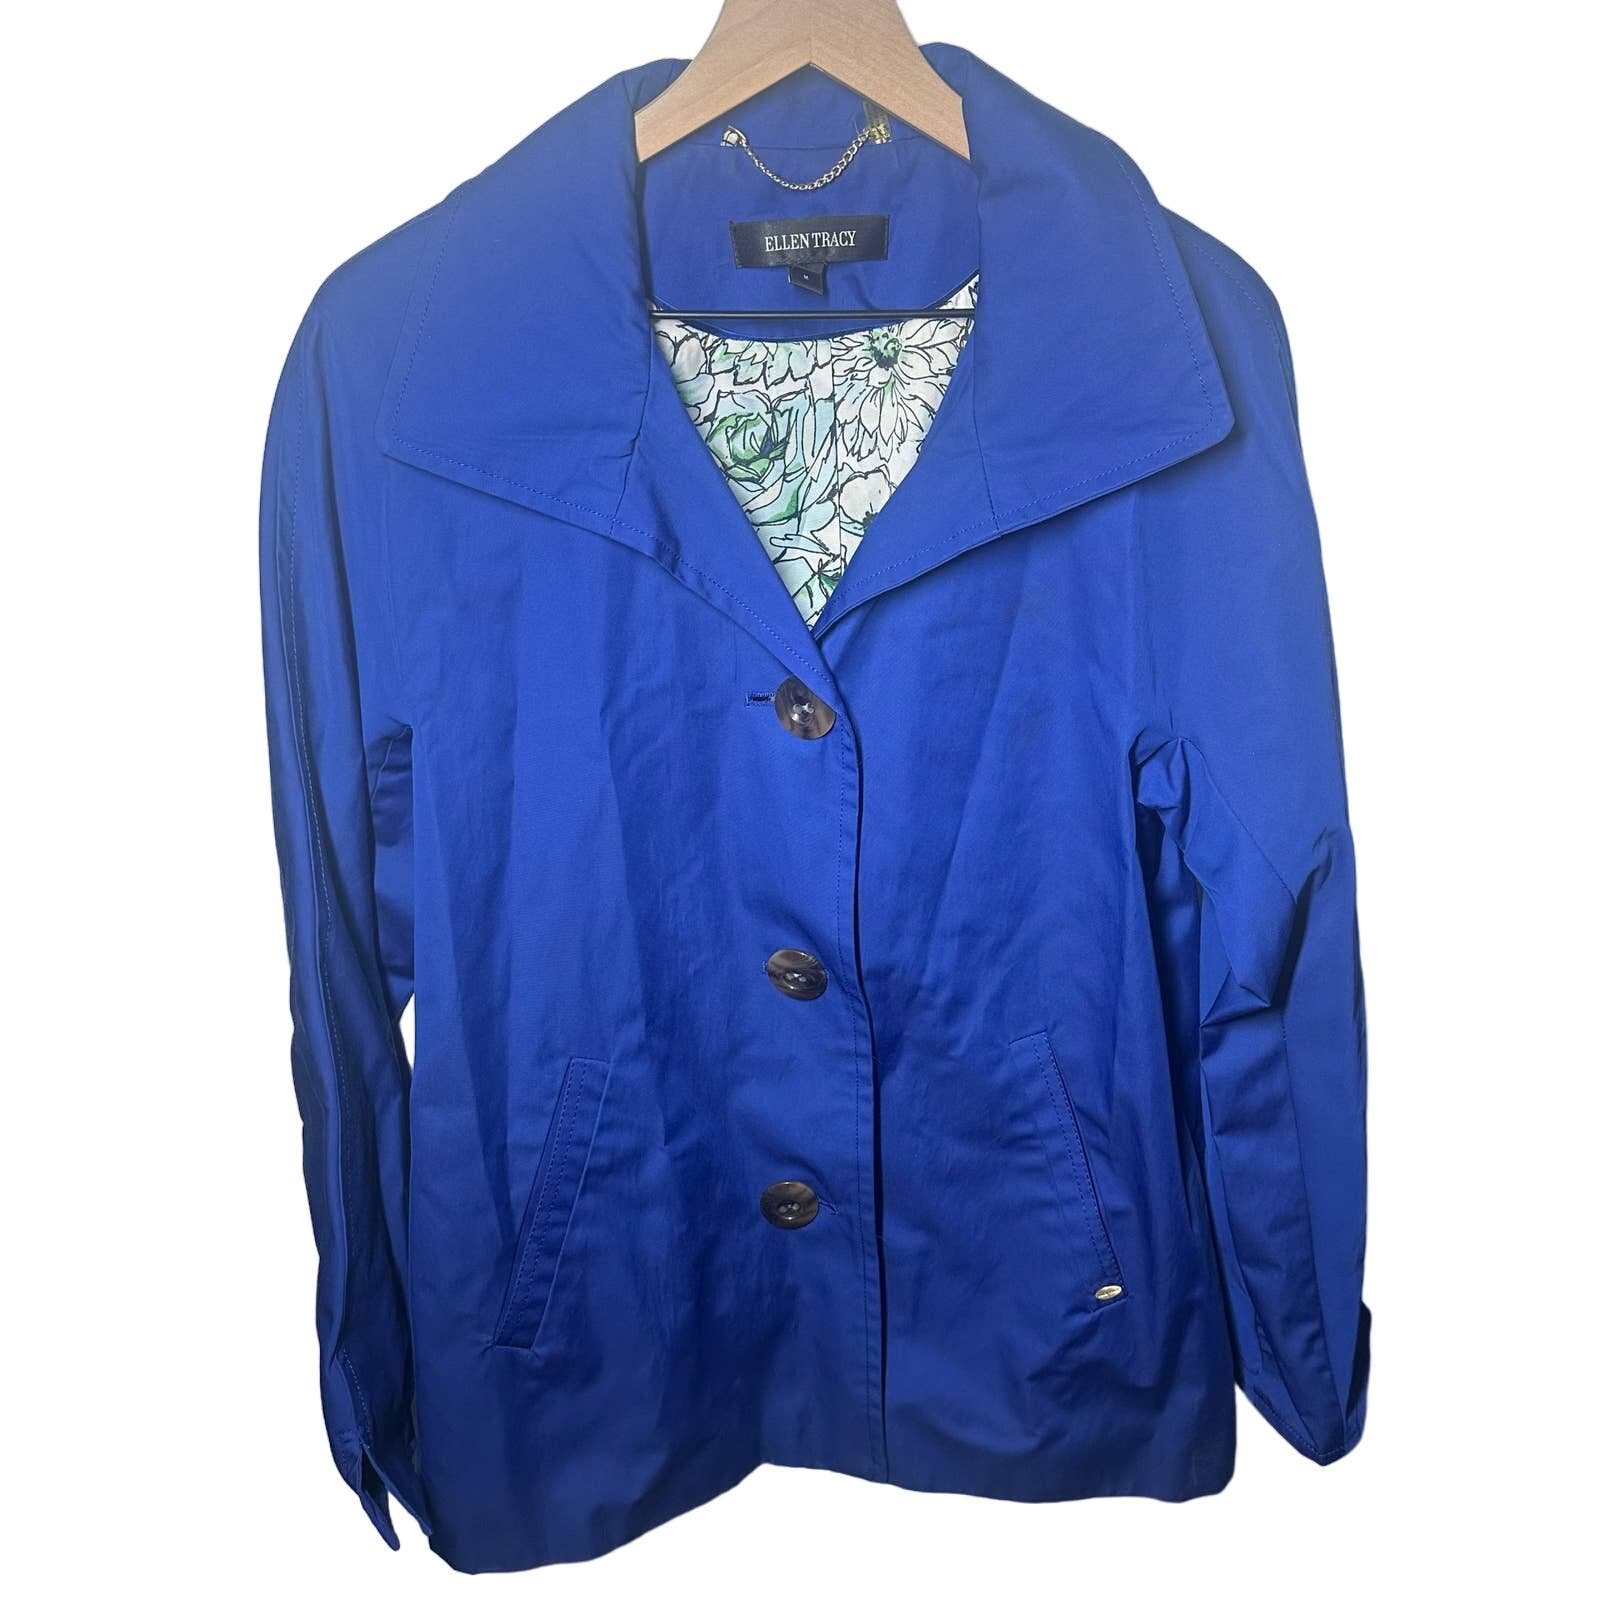 Ellen Tracy Royal Blue Rain Jacket Size Medium LcqWQiSLq